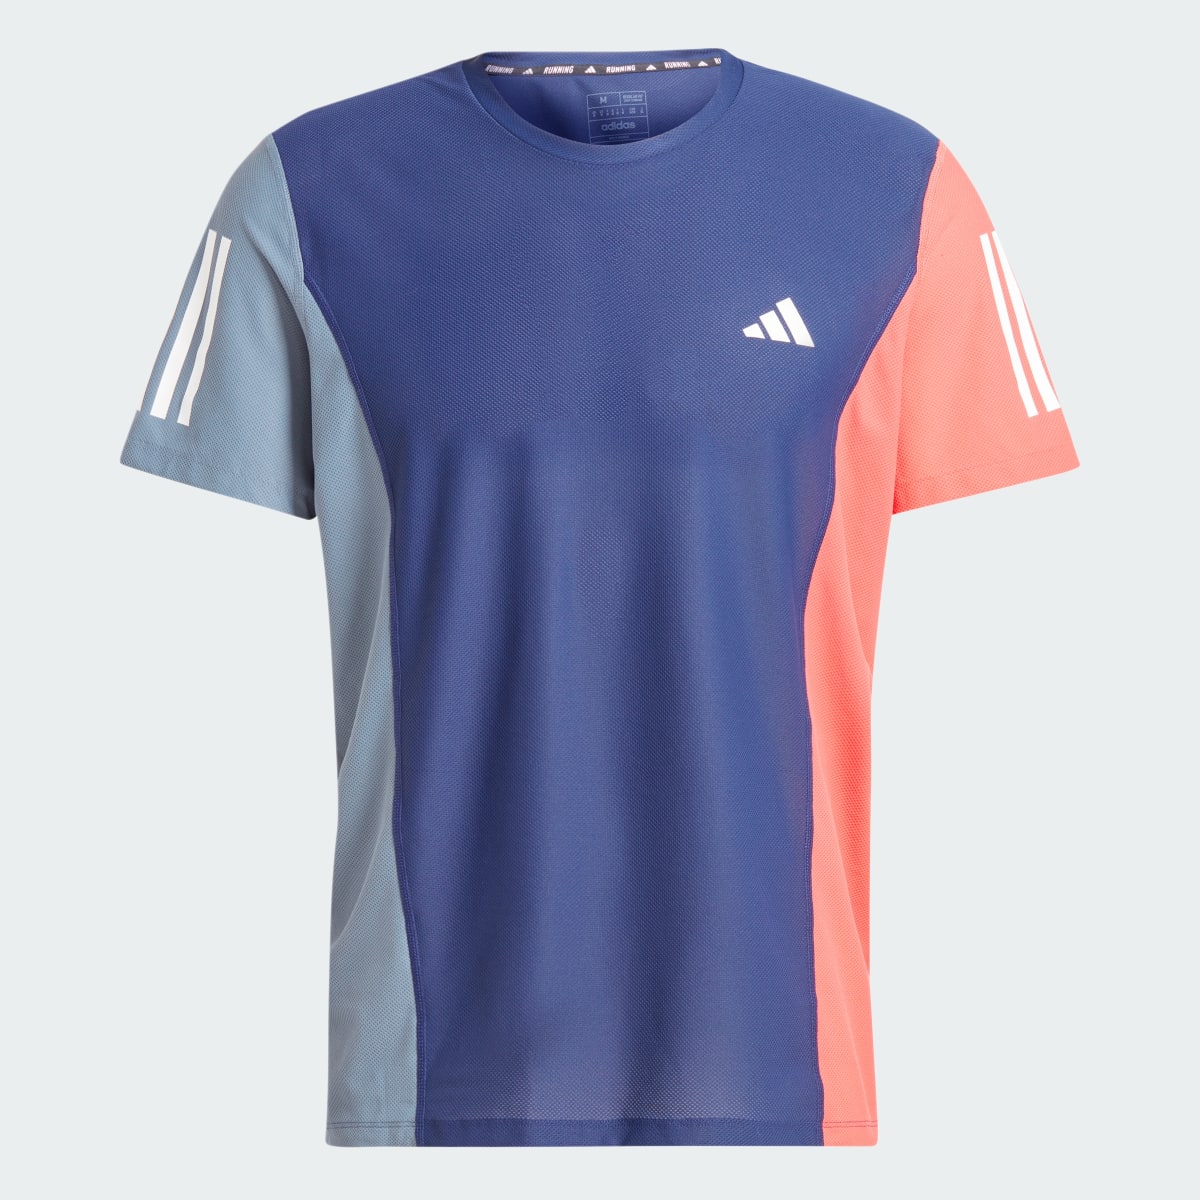 Adidas Own The Run Colorblock Tişört. 5